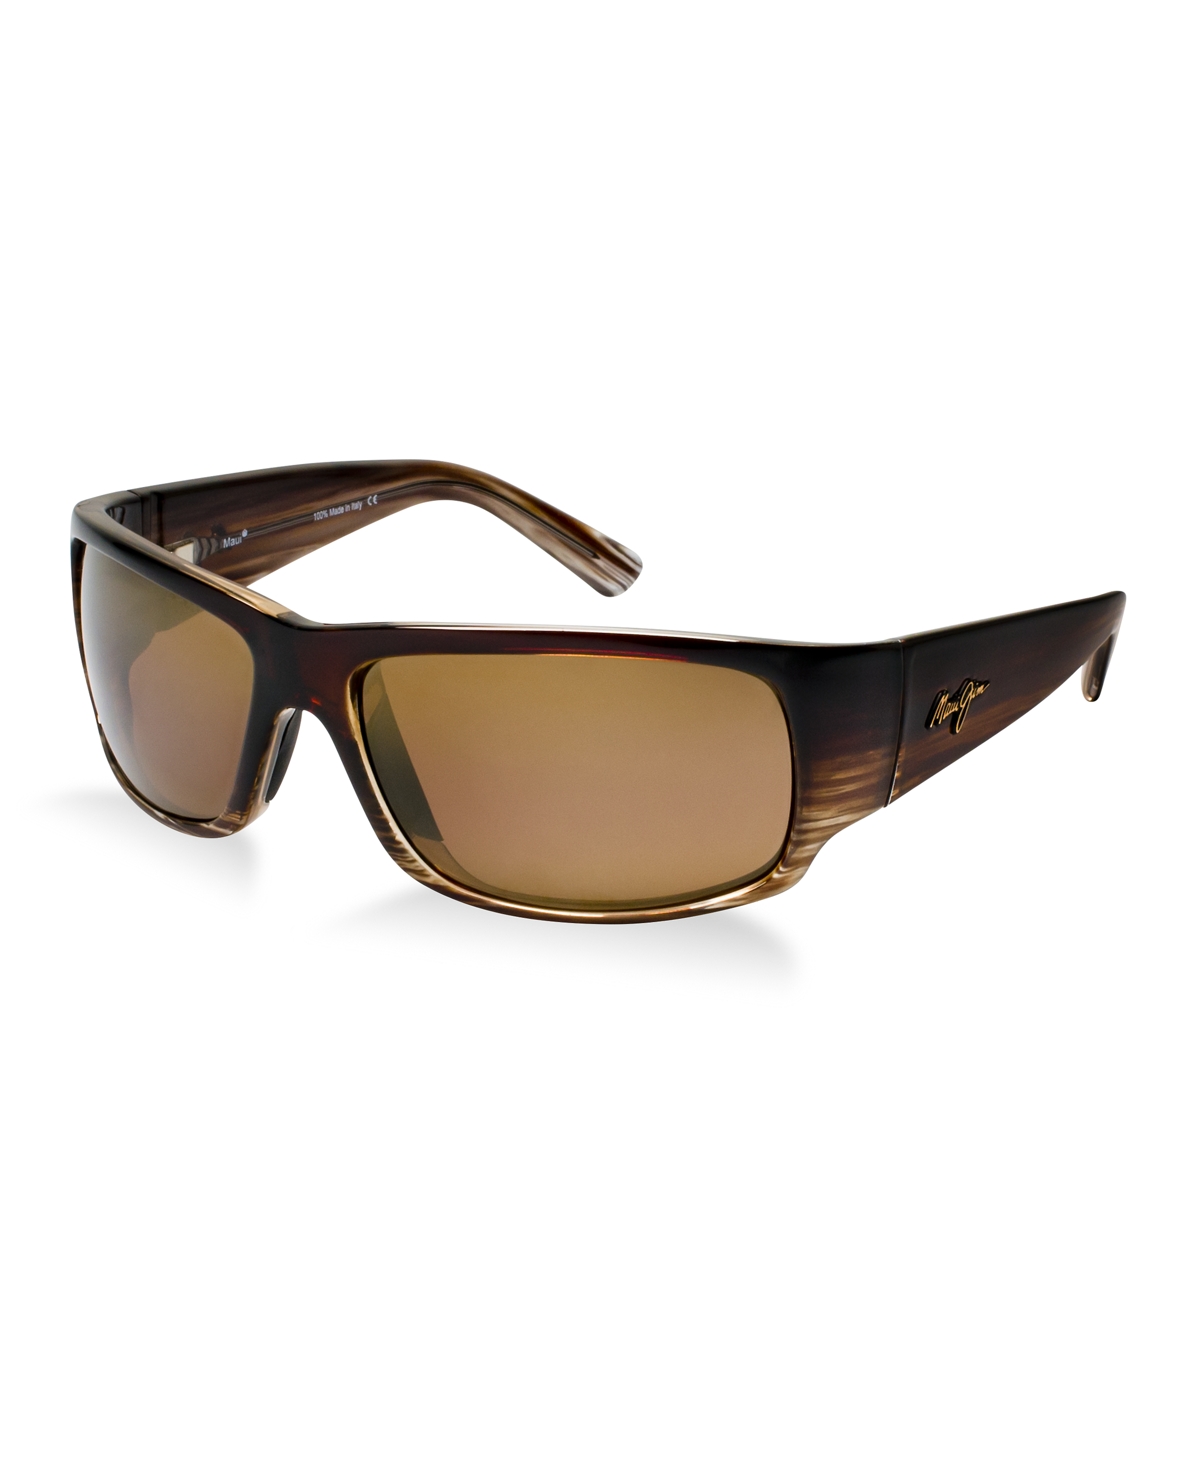 Polarized World Cup Sunglasses, H266-01 - Brown/Bronze